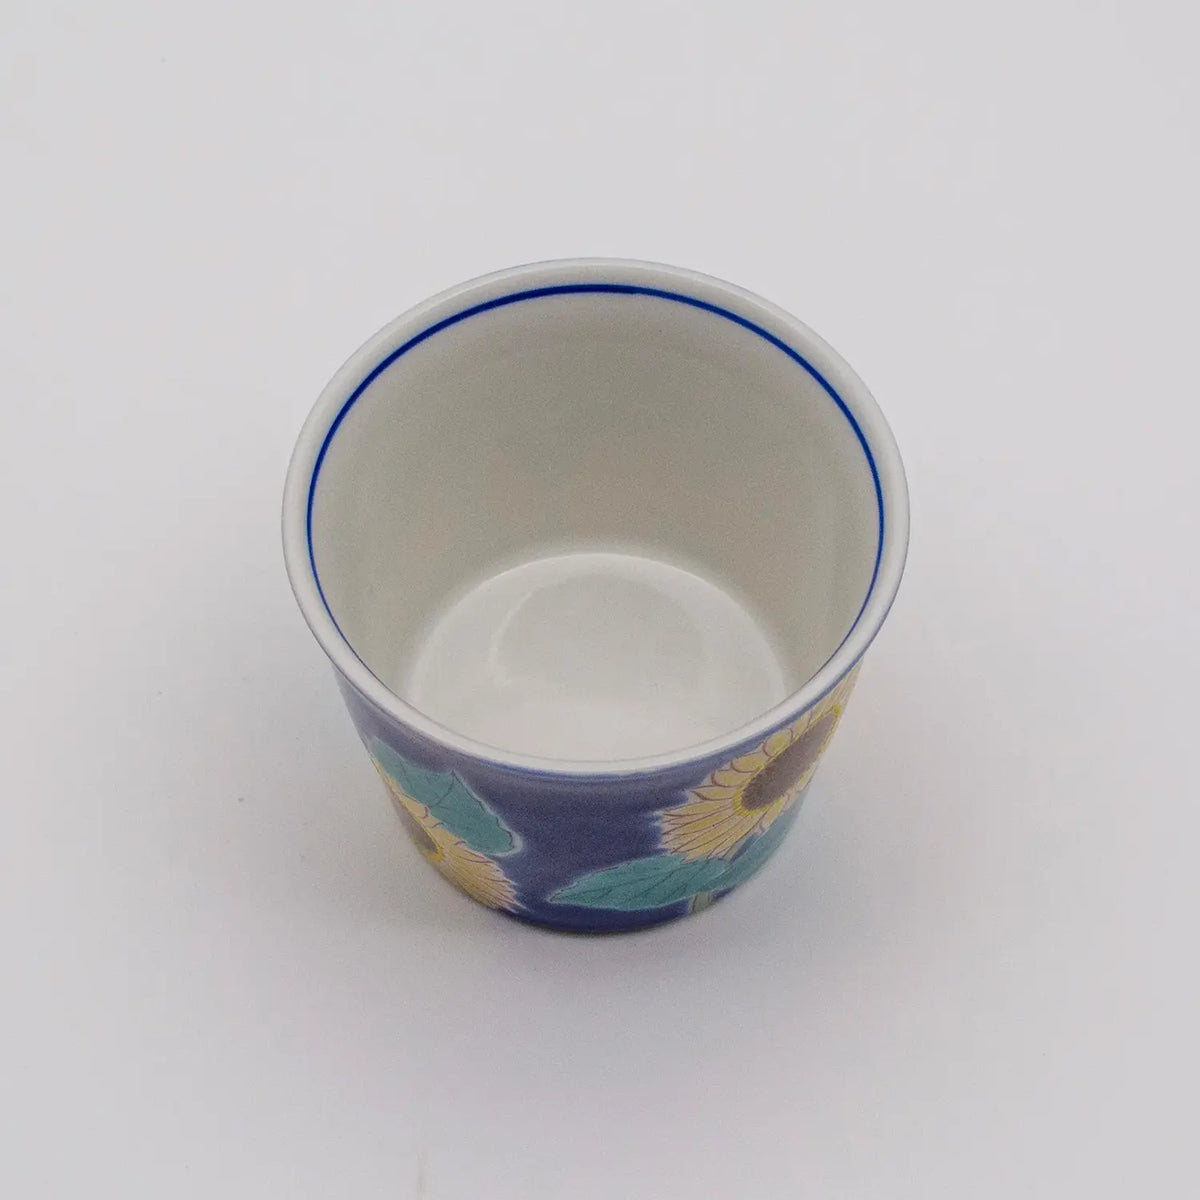 SEIKOU SHIKI-NO-HANA Kutani Porcelain Soba Choko Cup Sunflower